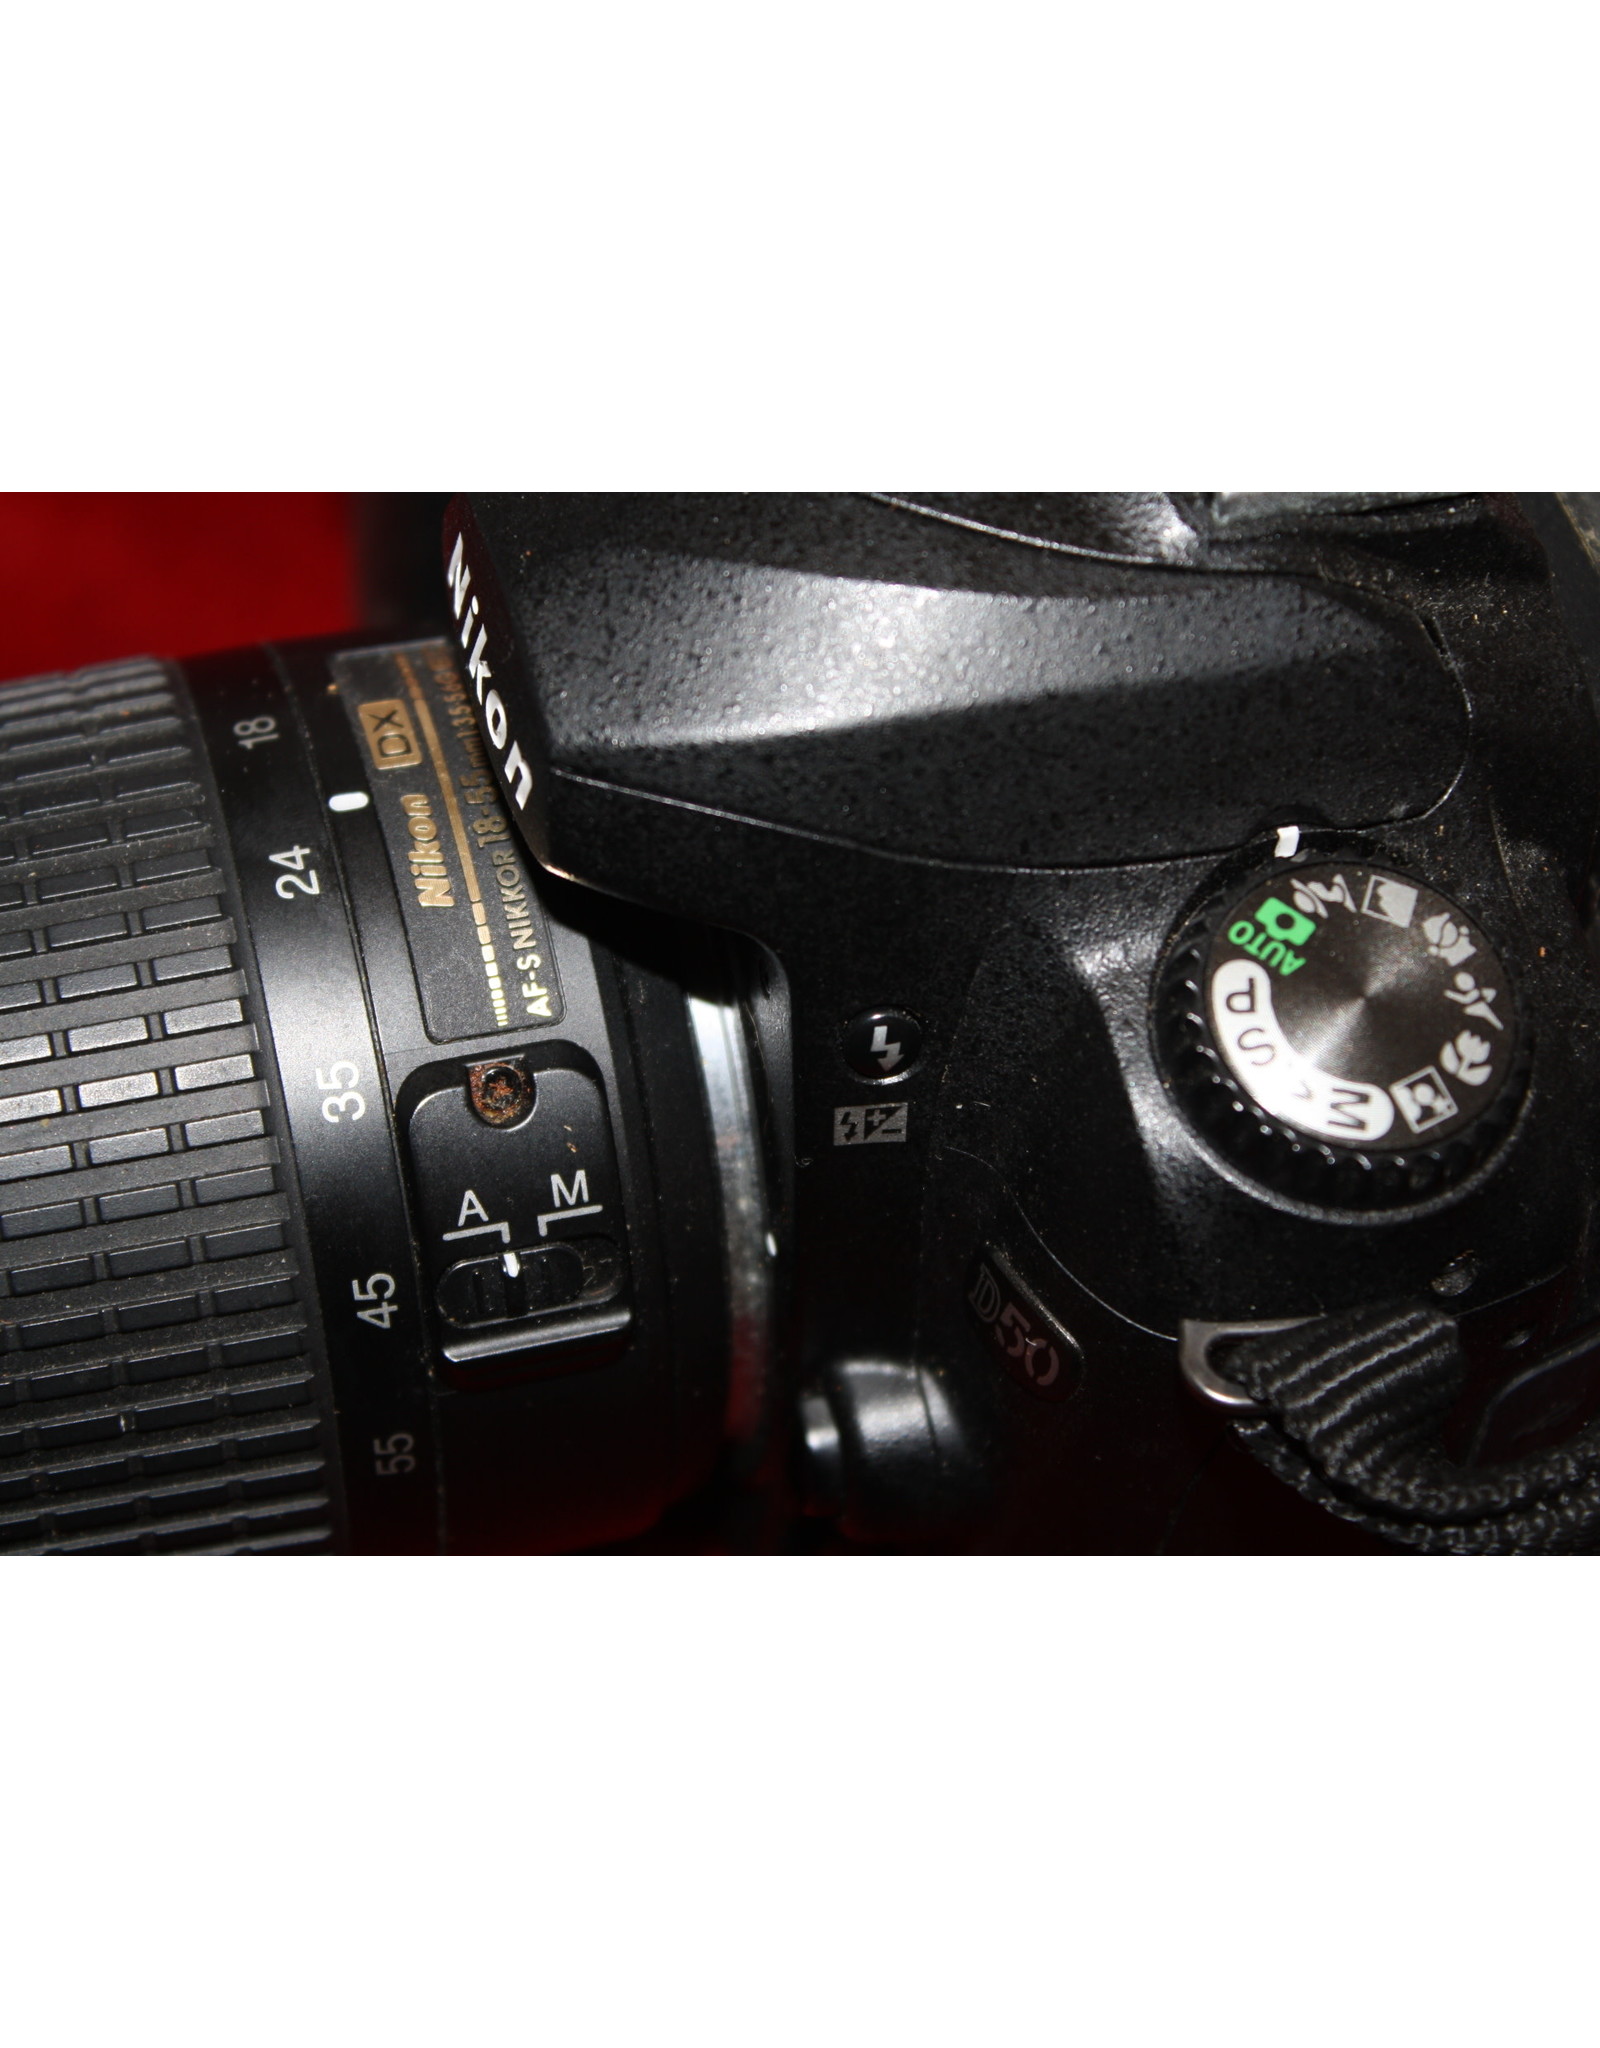 Nikon D D50 6.1MP Digital SLR Camera with 18-55mm Lens- Black Body